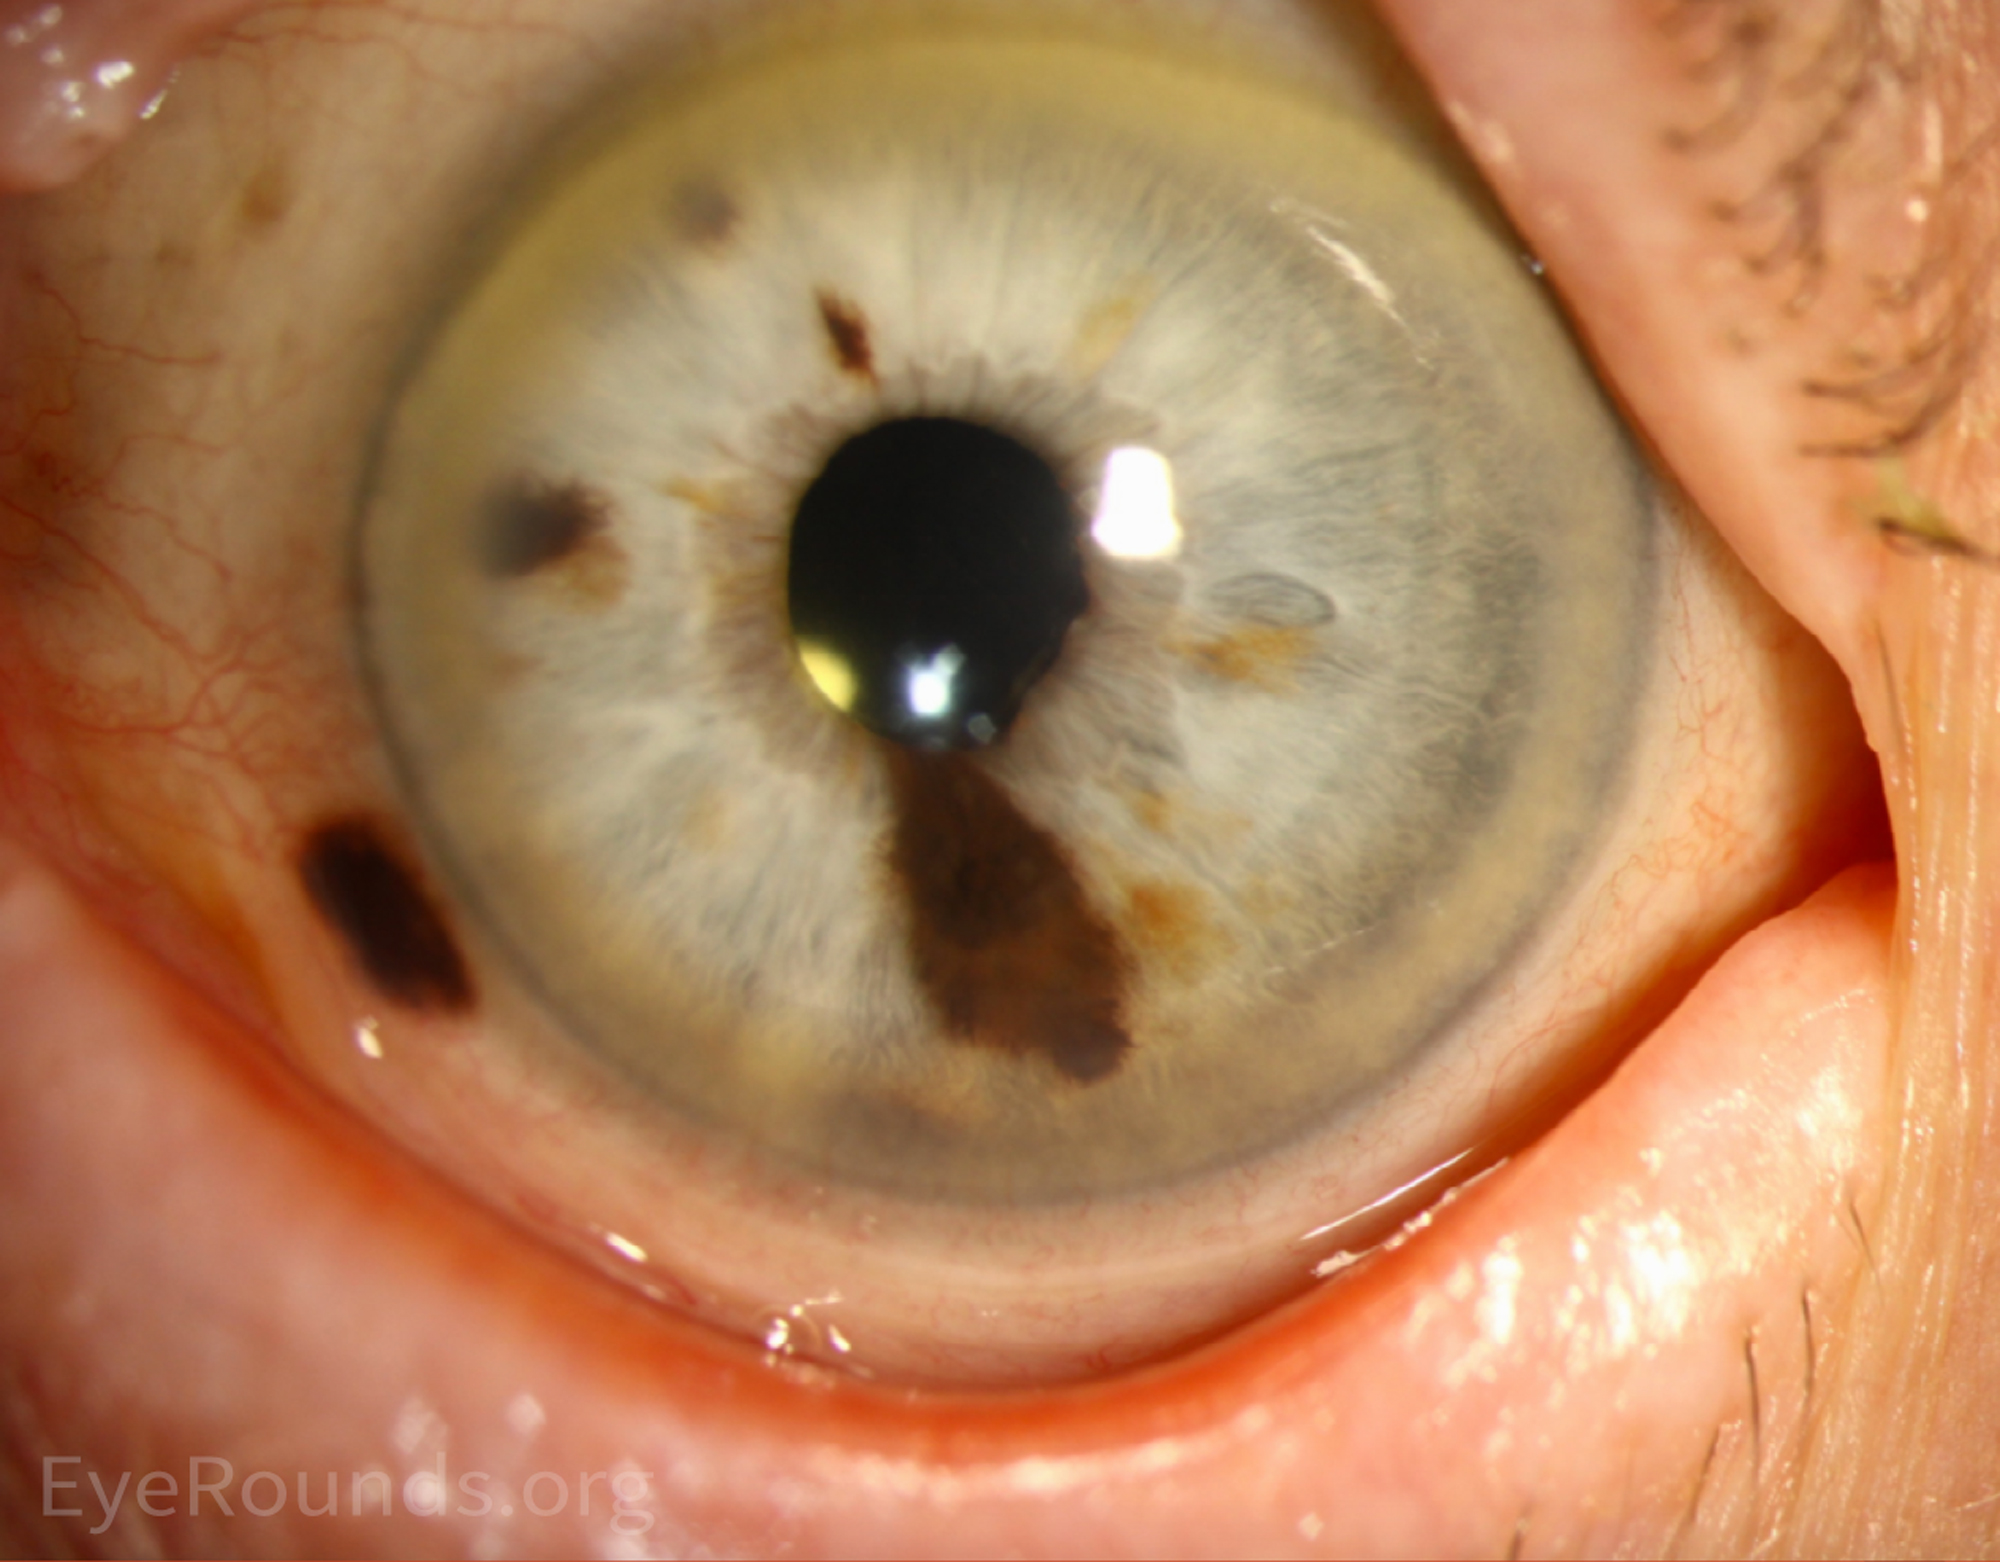 Iris Melanoma lower portion of eye and left side